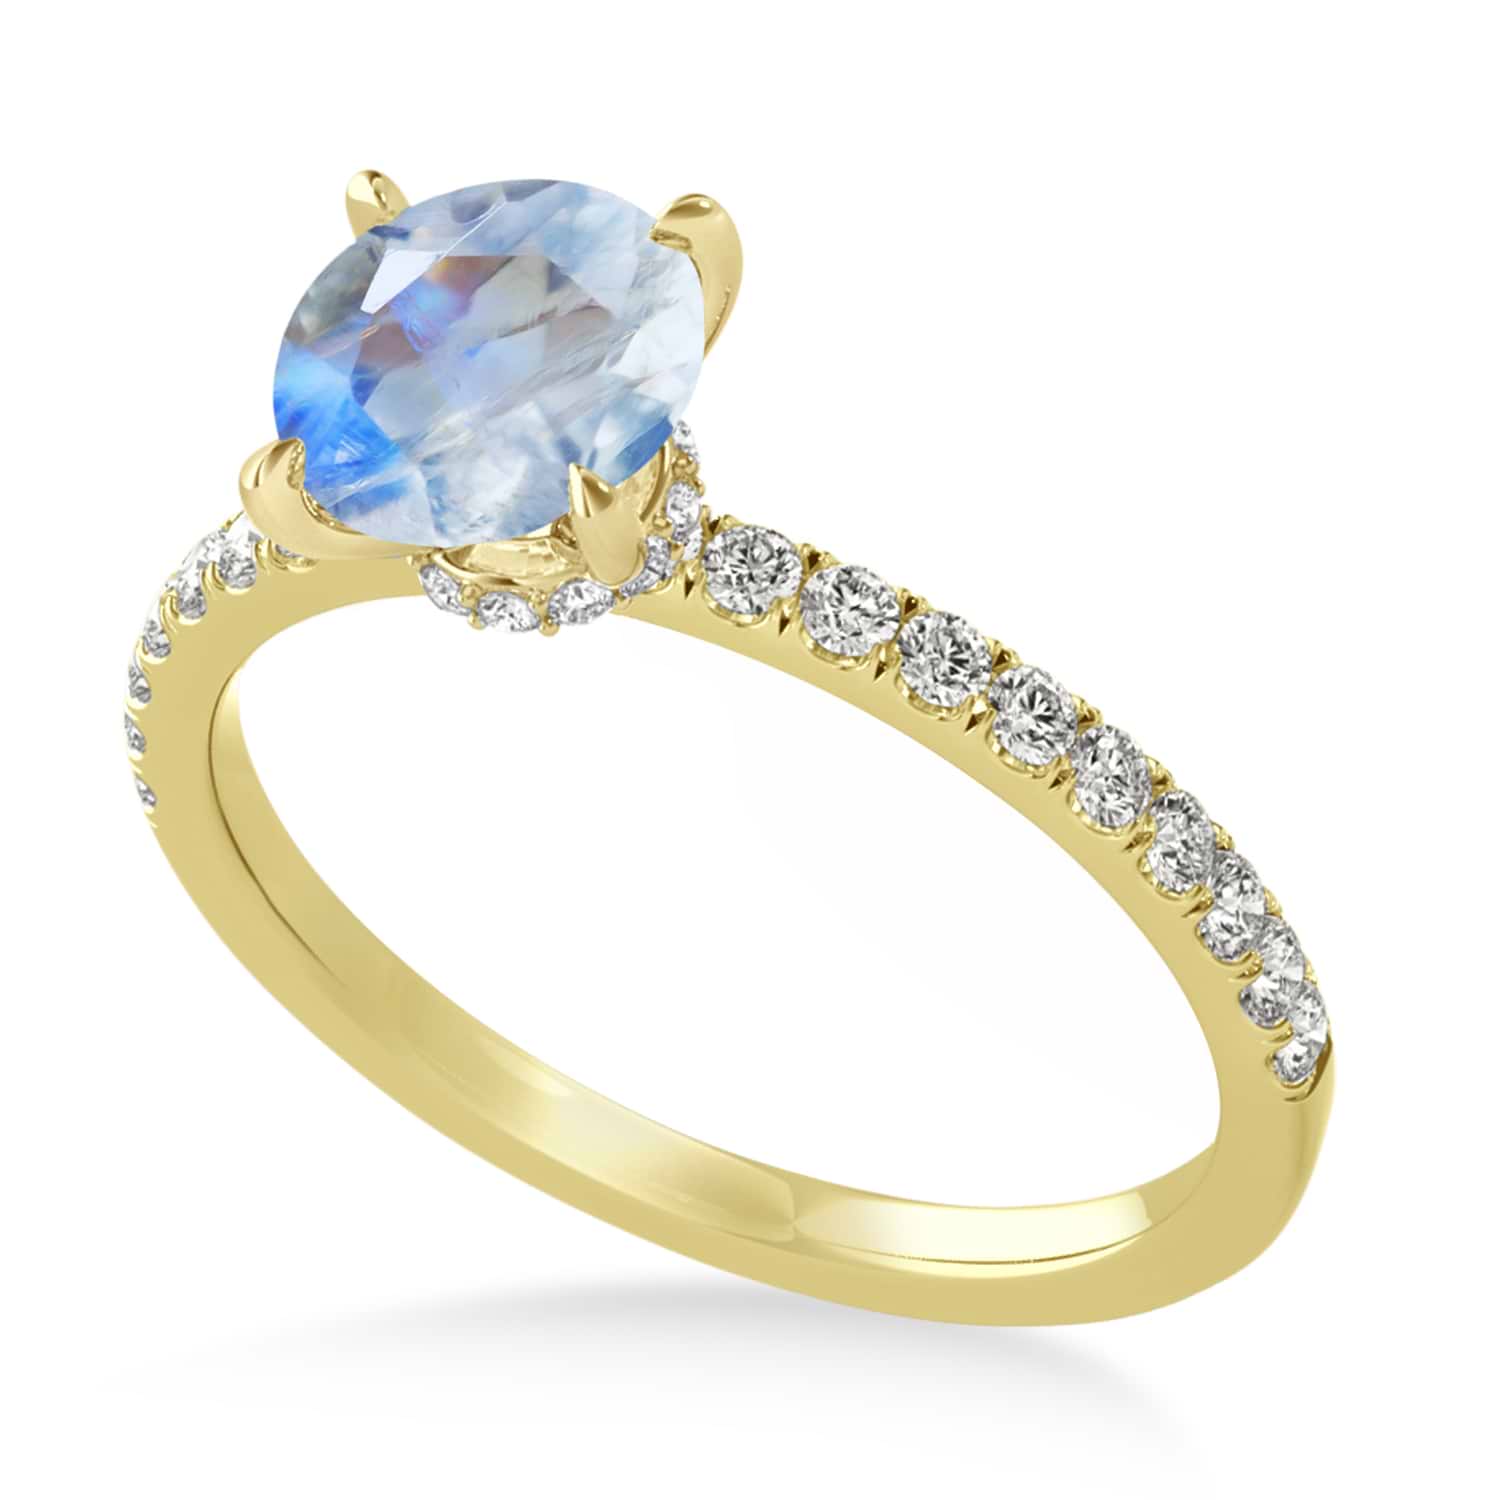 Round Moonstone & Diamond Single Row Hidden Halo Engagement Ring 18k Yellow Gold (1.25ct)